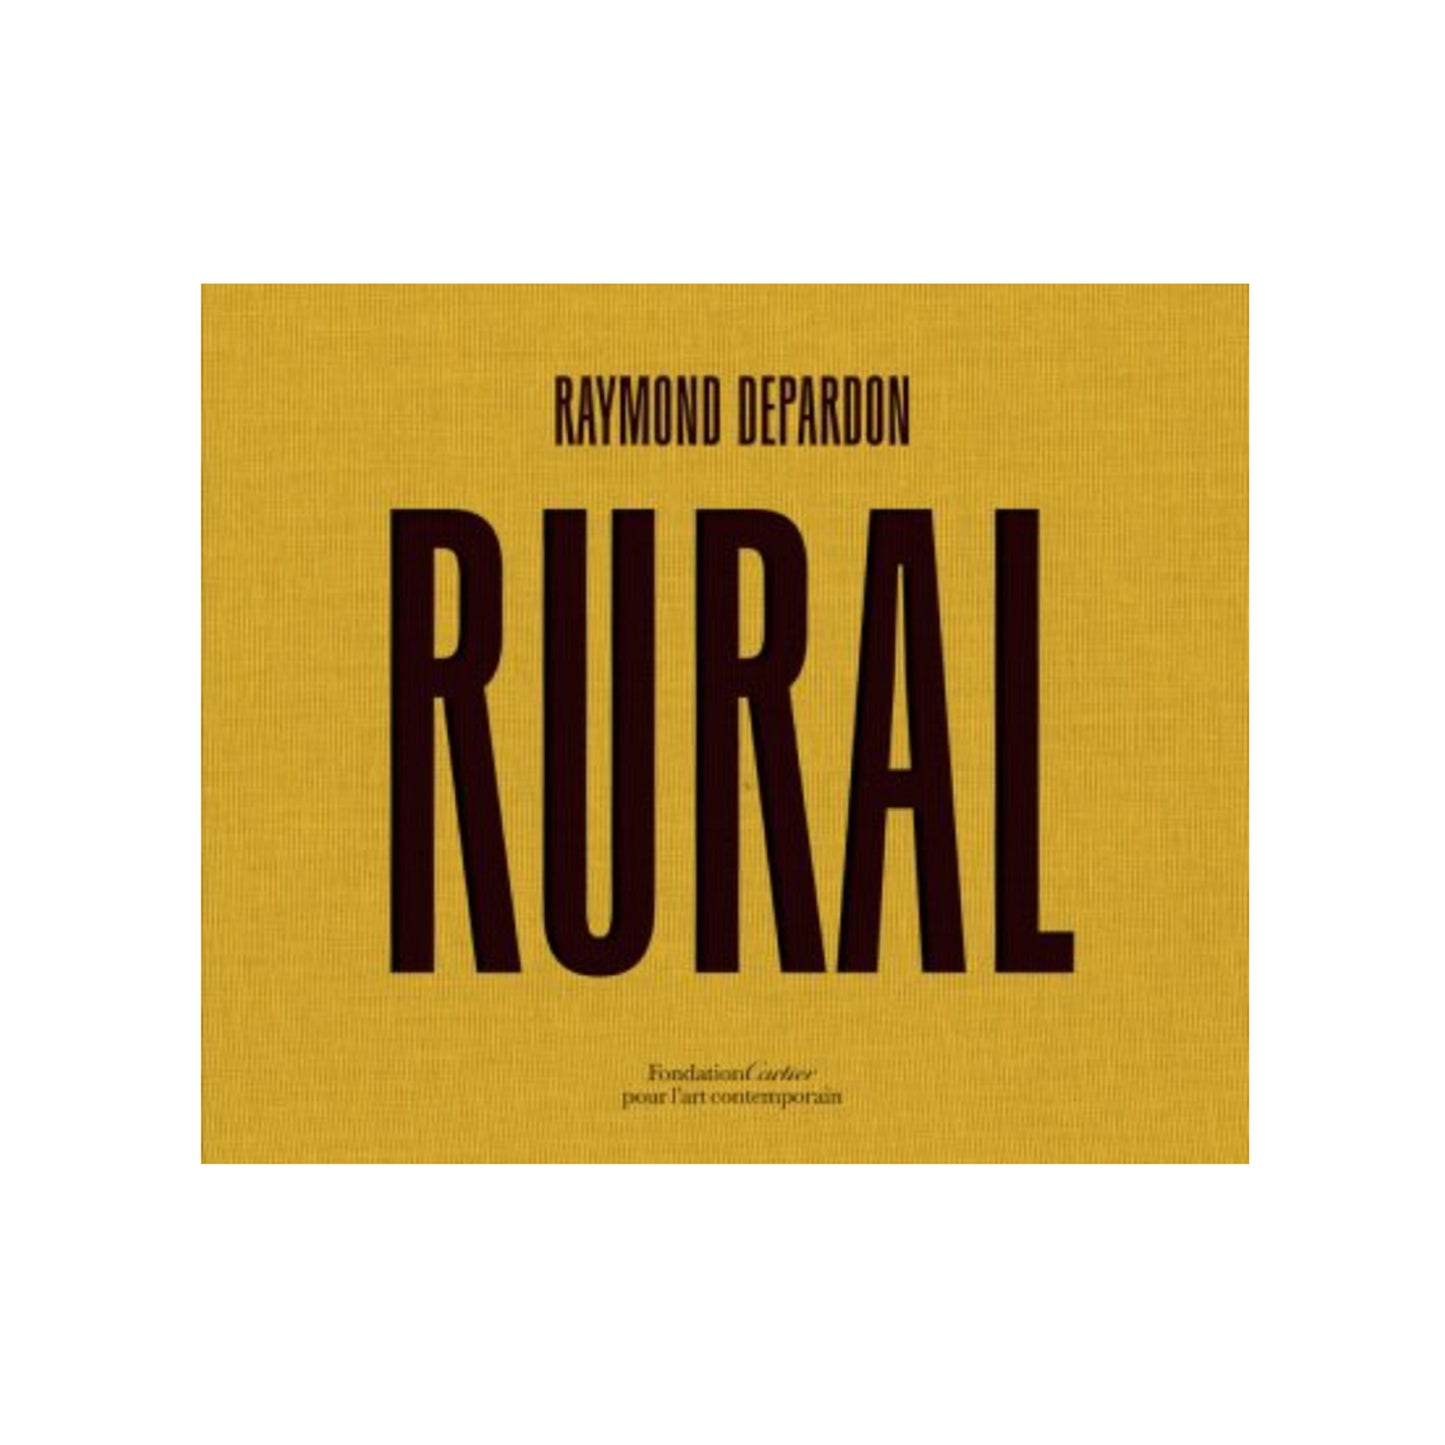 Rural by Raymond Depardon